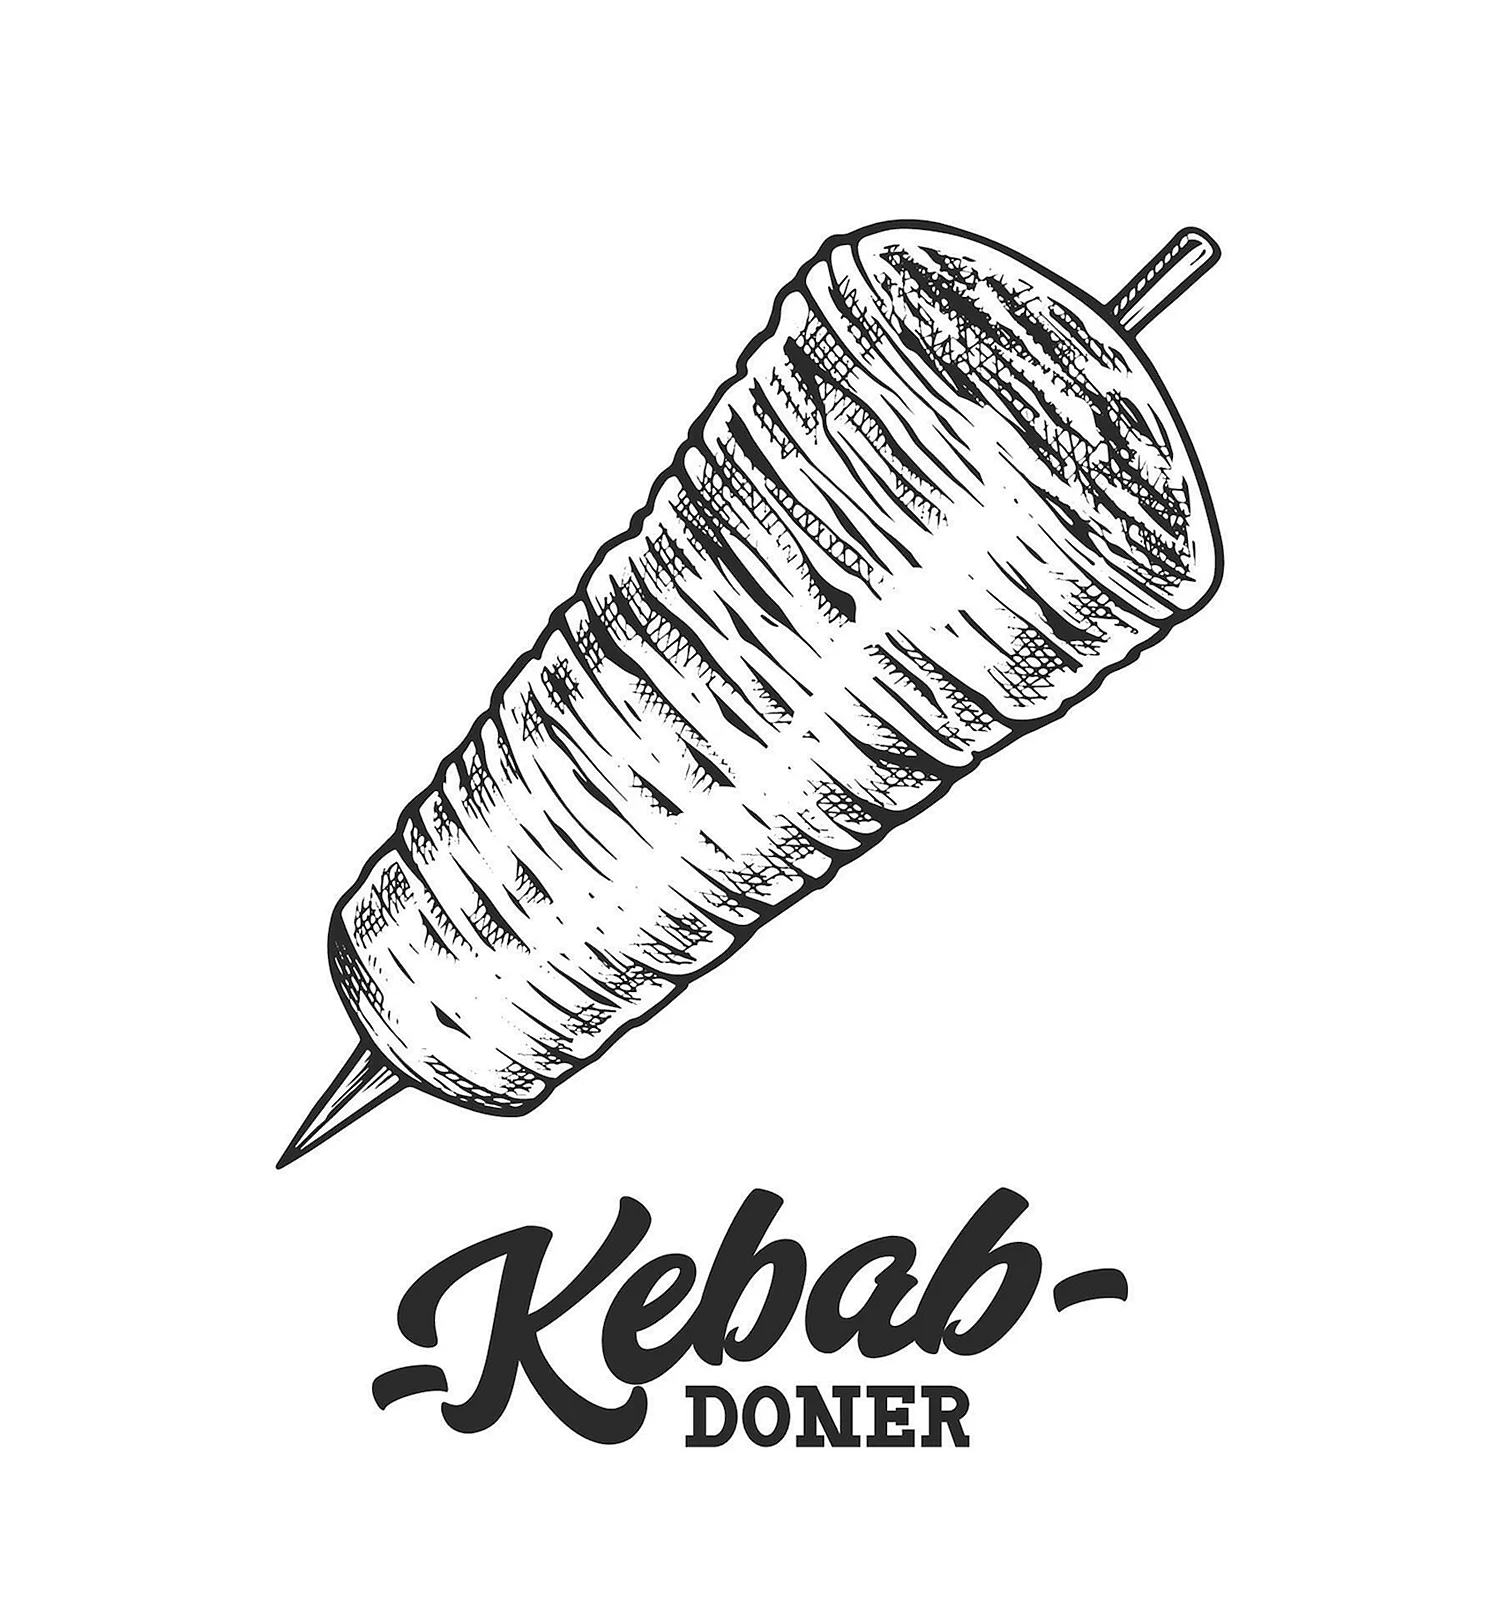 Донер кебаб логотип